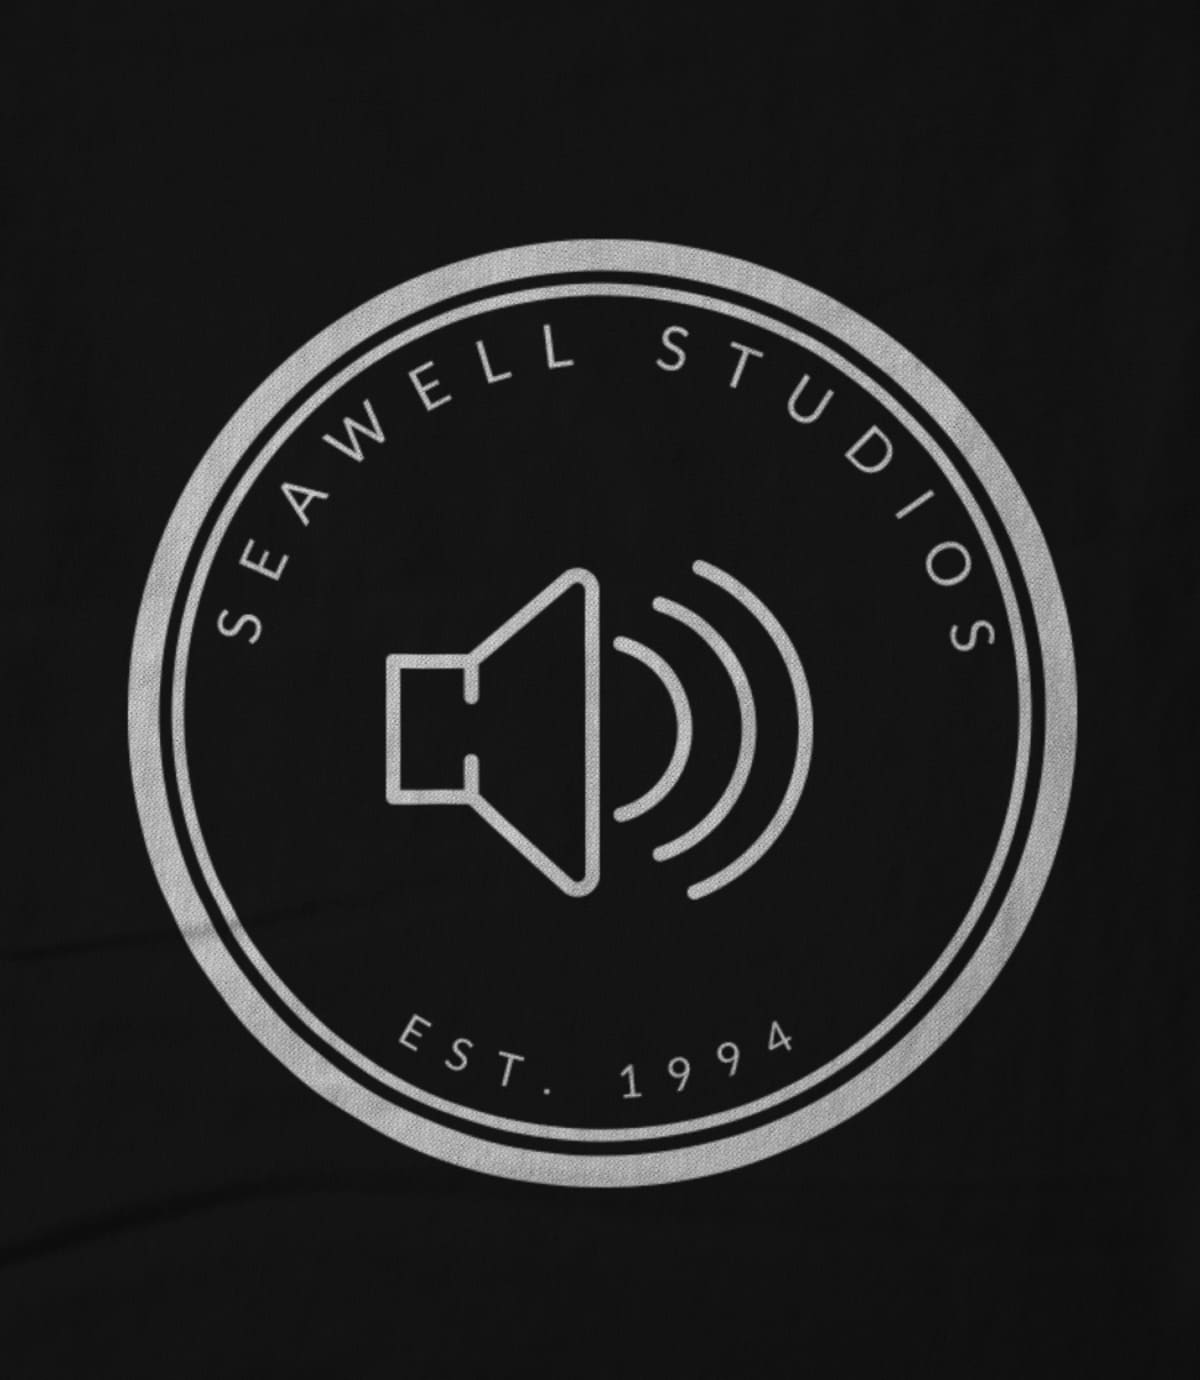 Seawell Studios